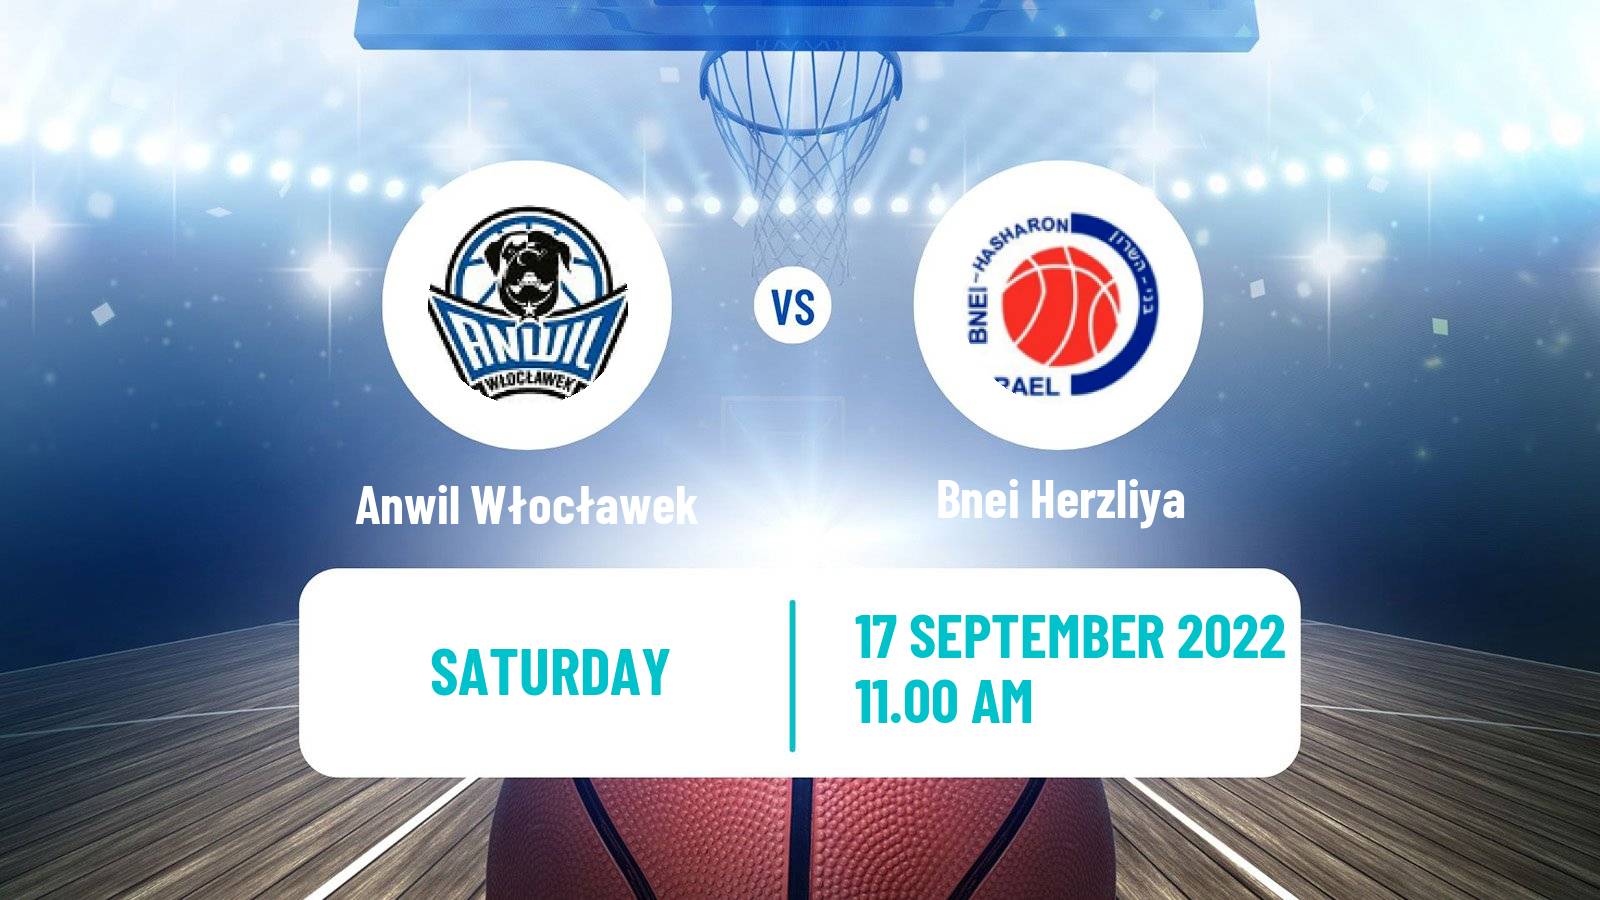 Basketball Club Friendly Basketball Anwil Włocławek - Bnei Herzliya